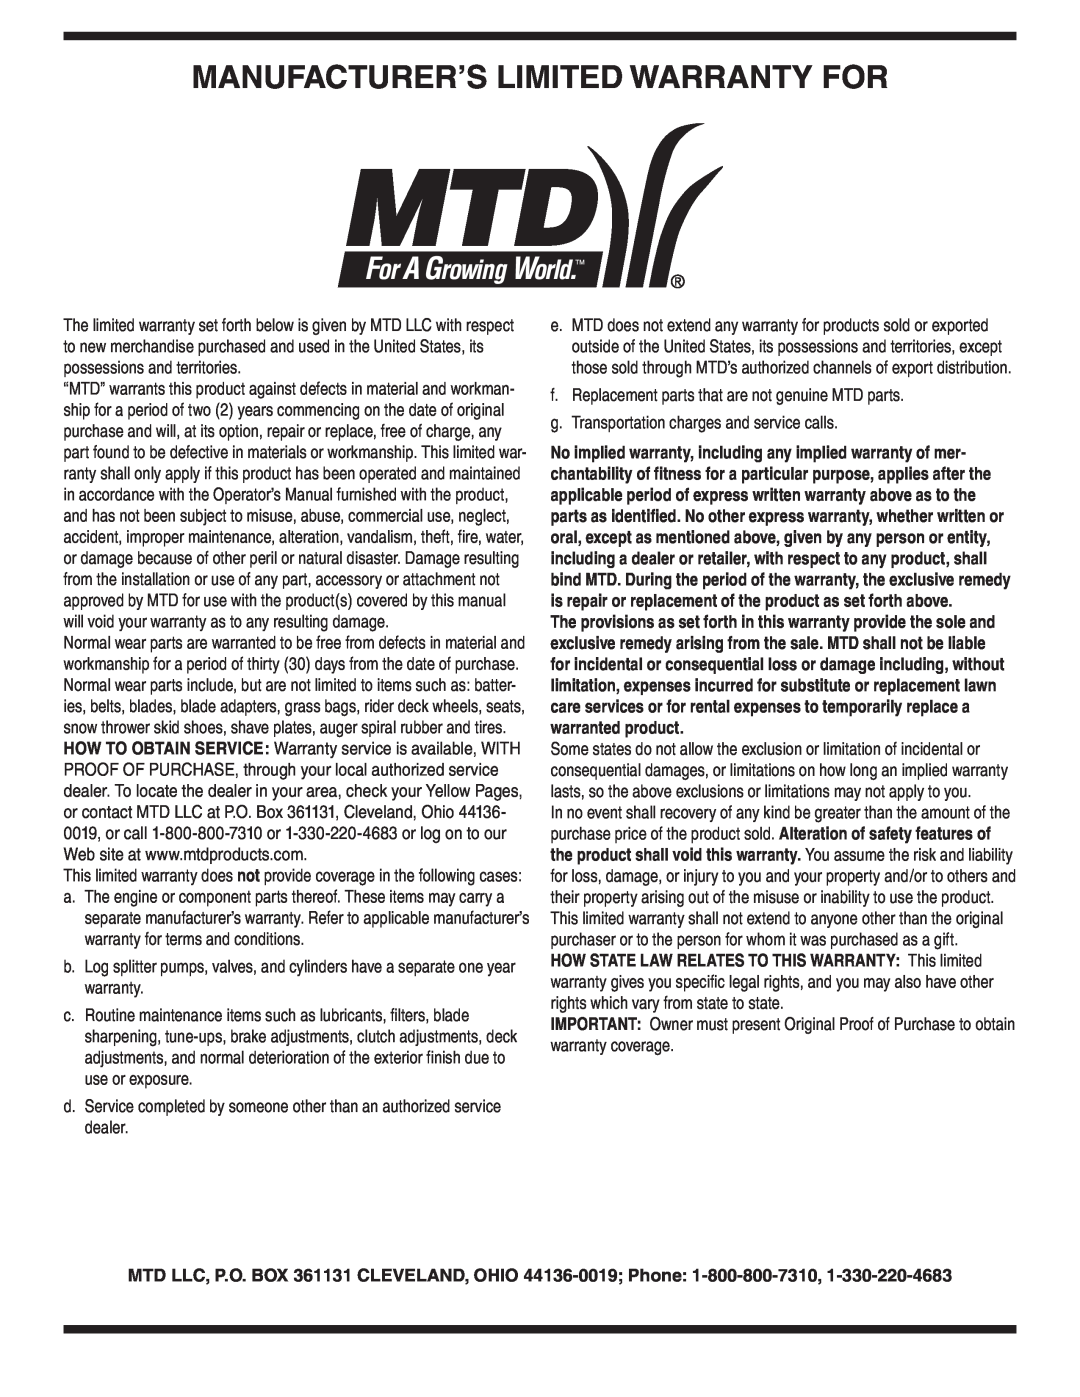 MTD 30 warranty Manufacturer’S Limited Warranty For 